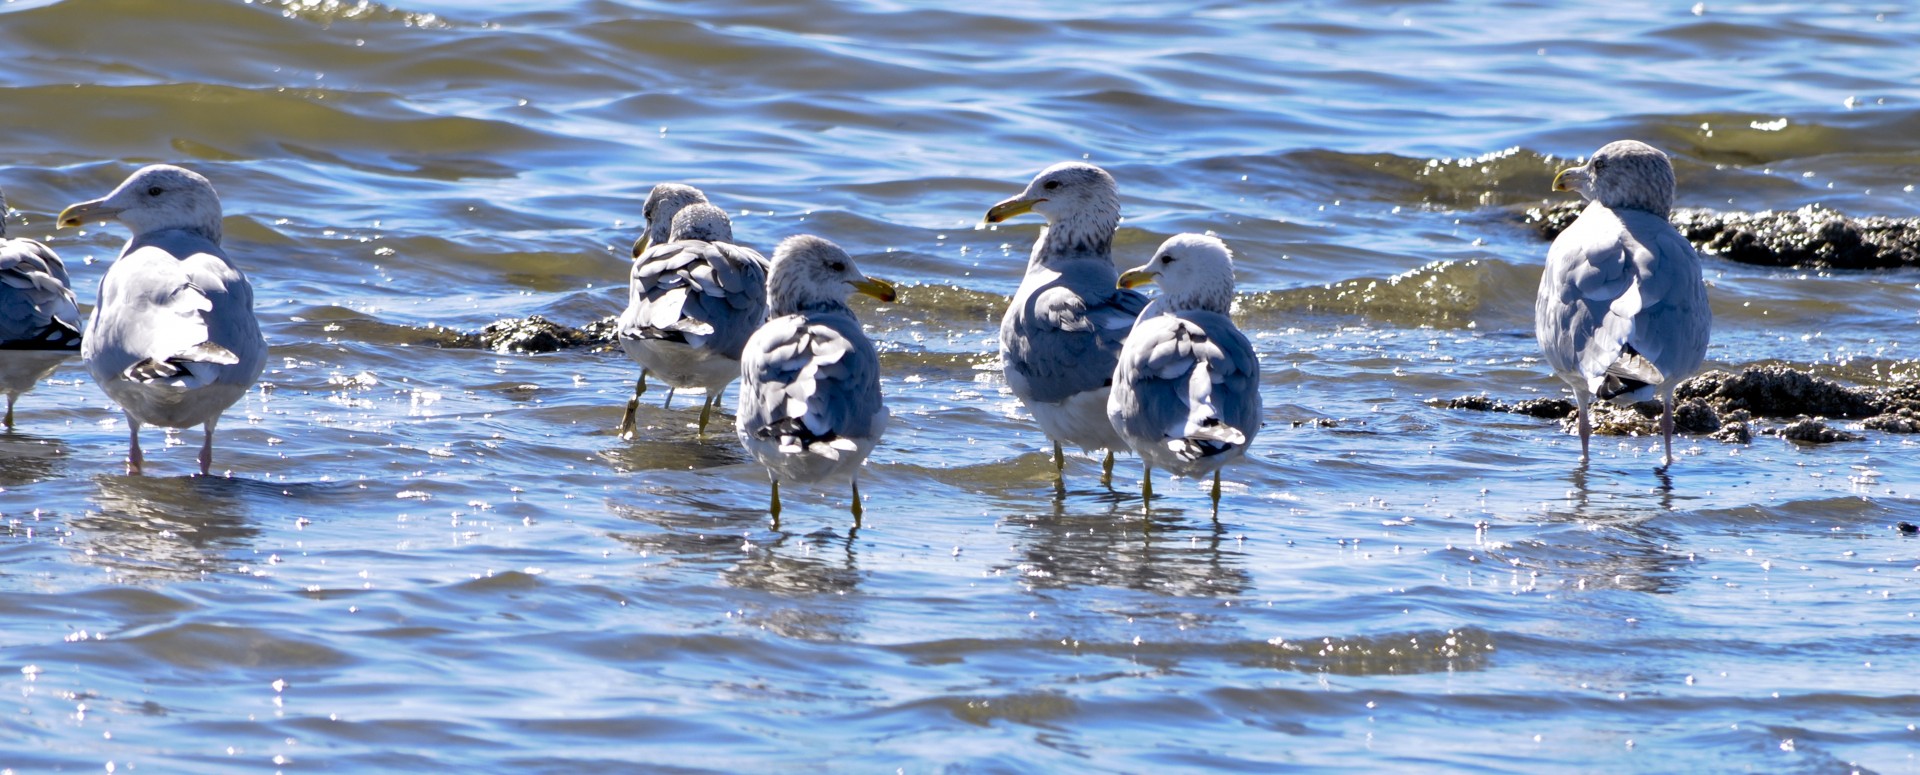 Wading Seagulls